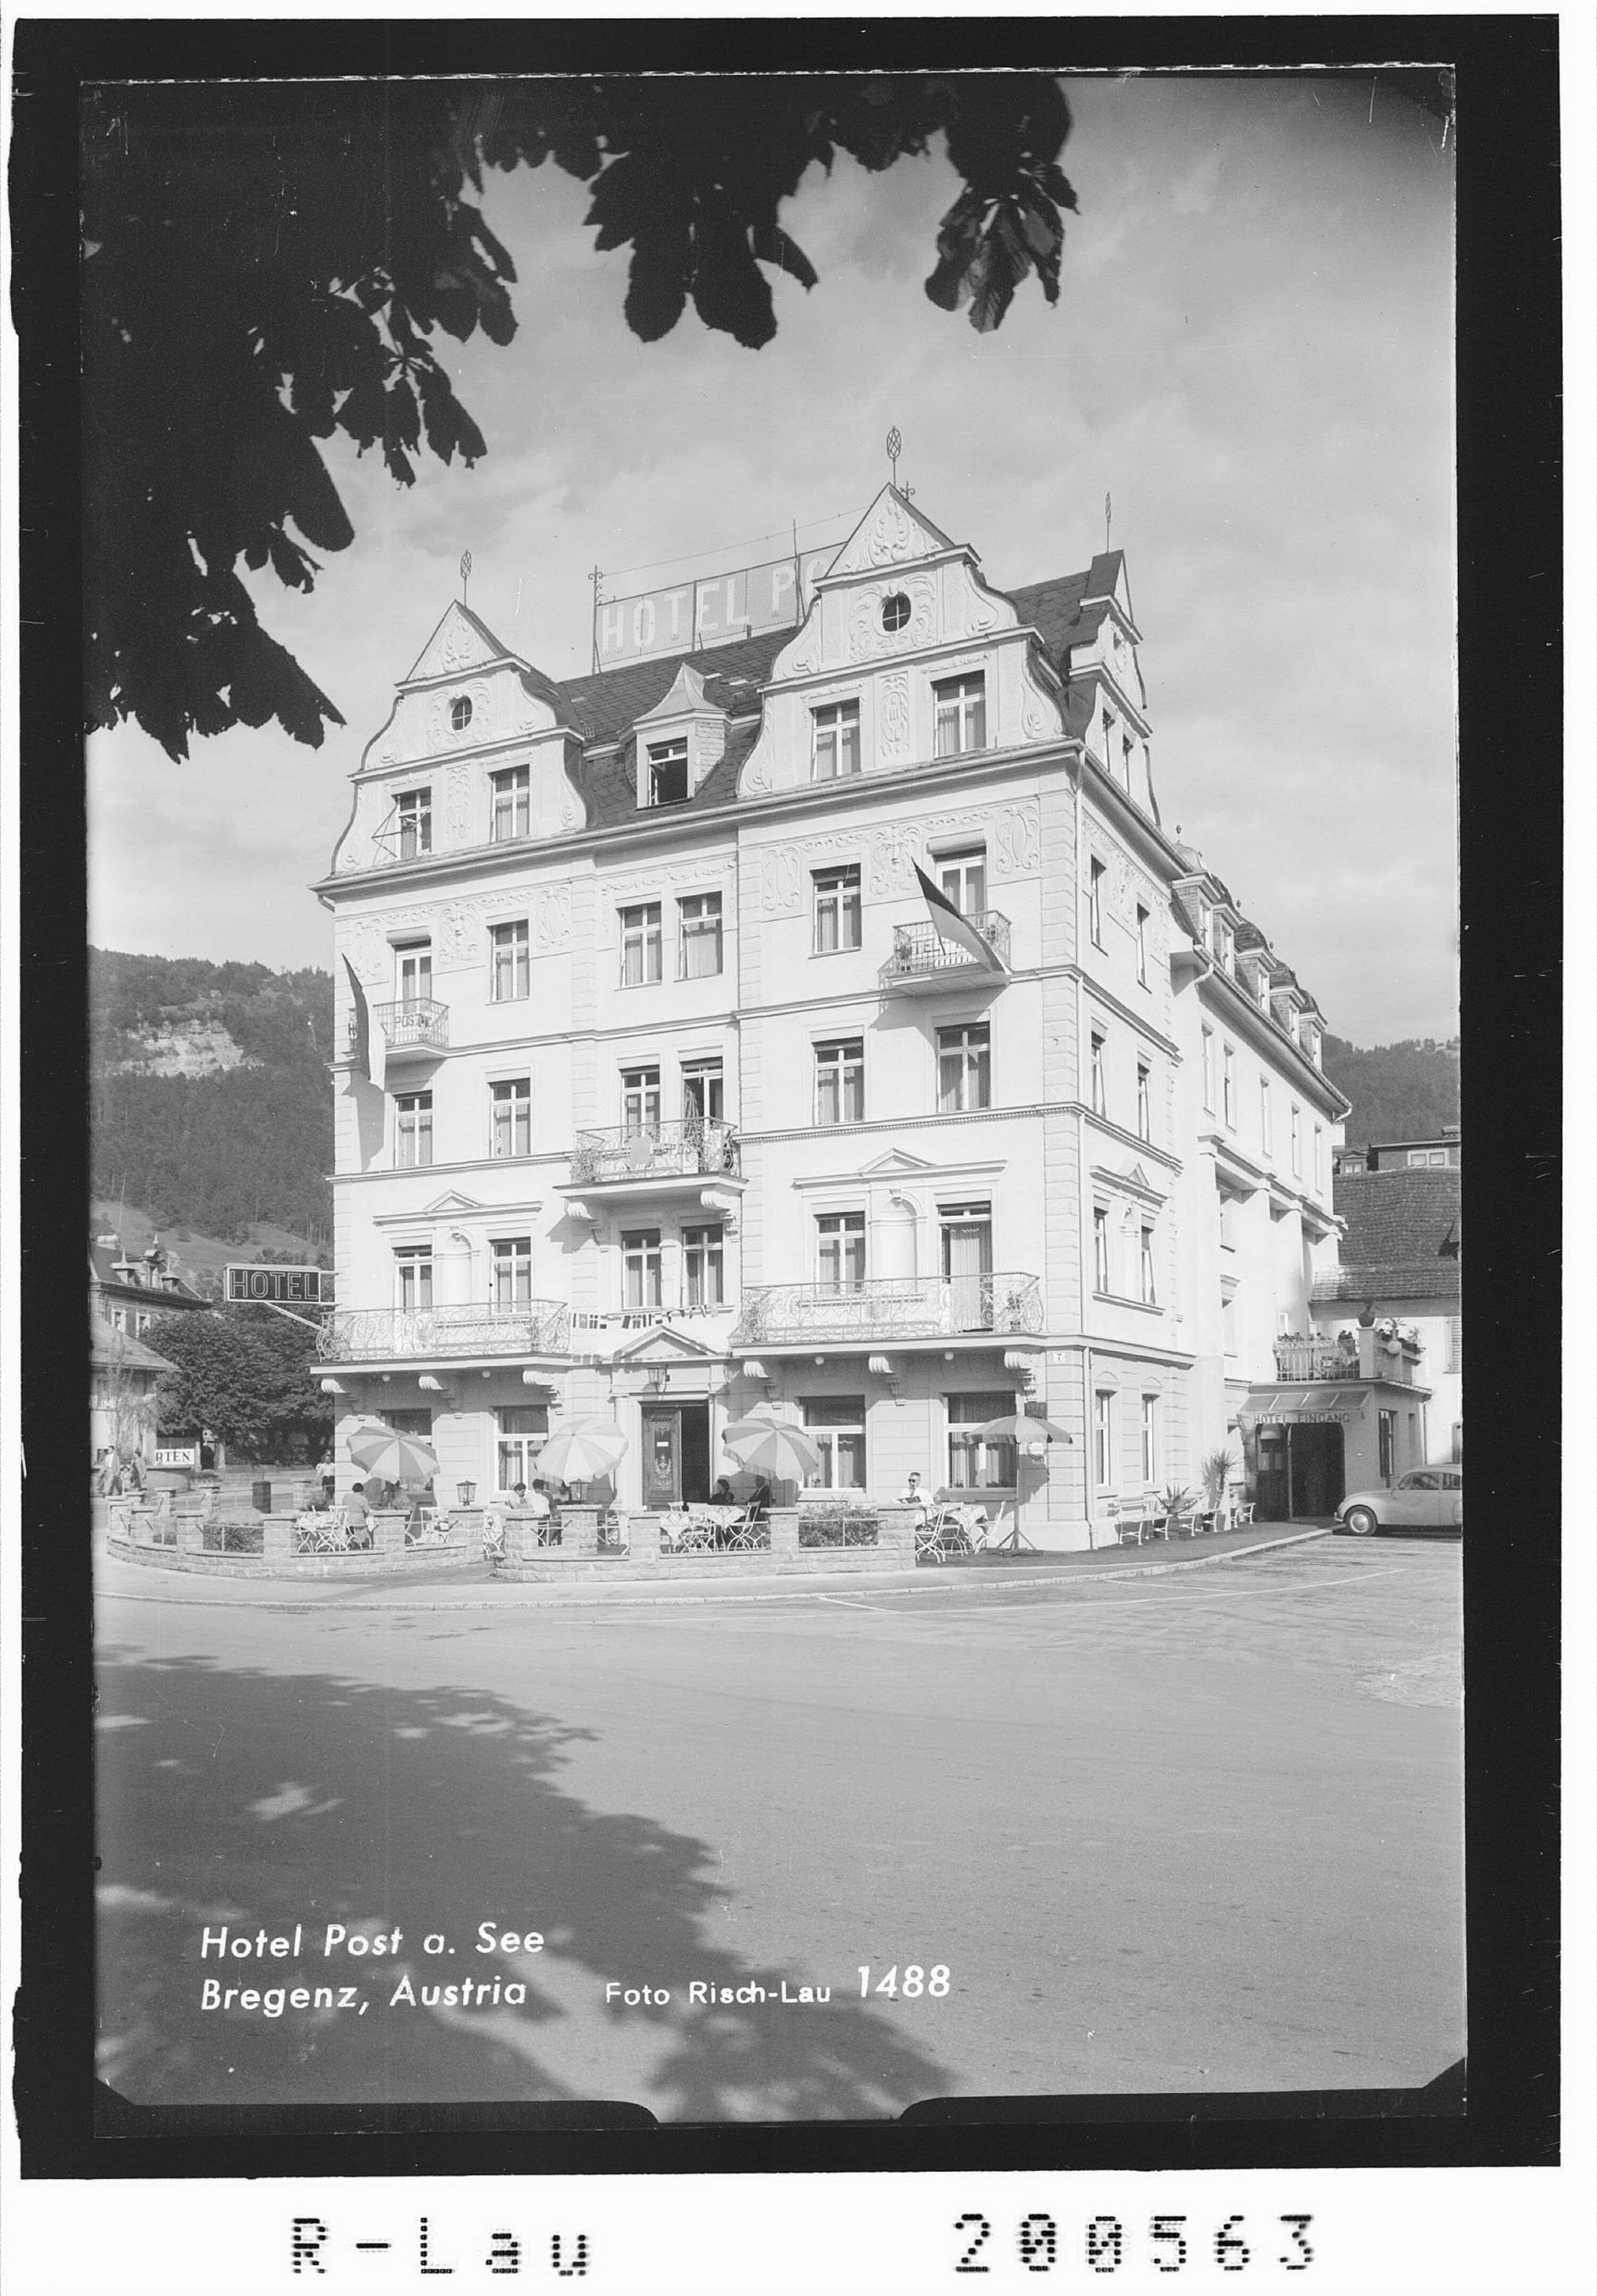 Hotel Post am See in Bregenz / Austria></div>


    <hr>
    <div class=